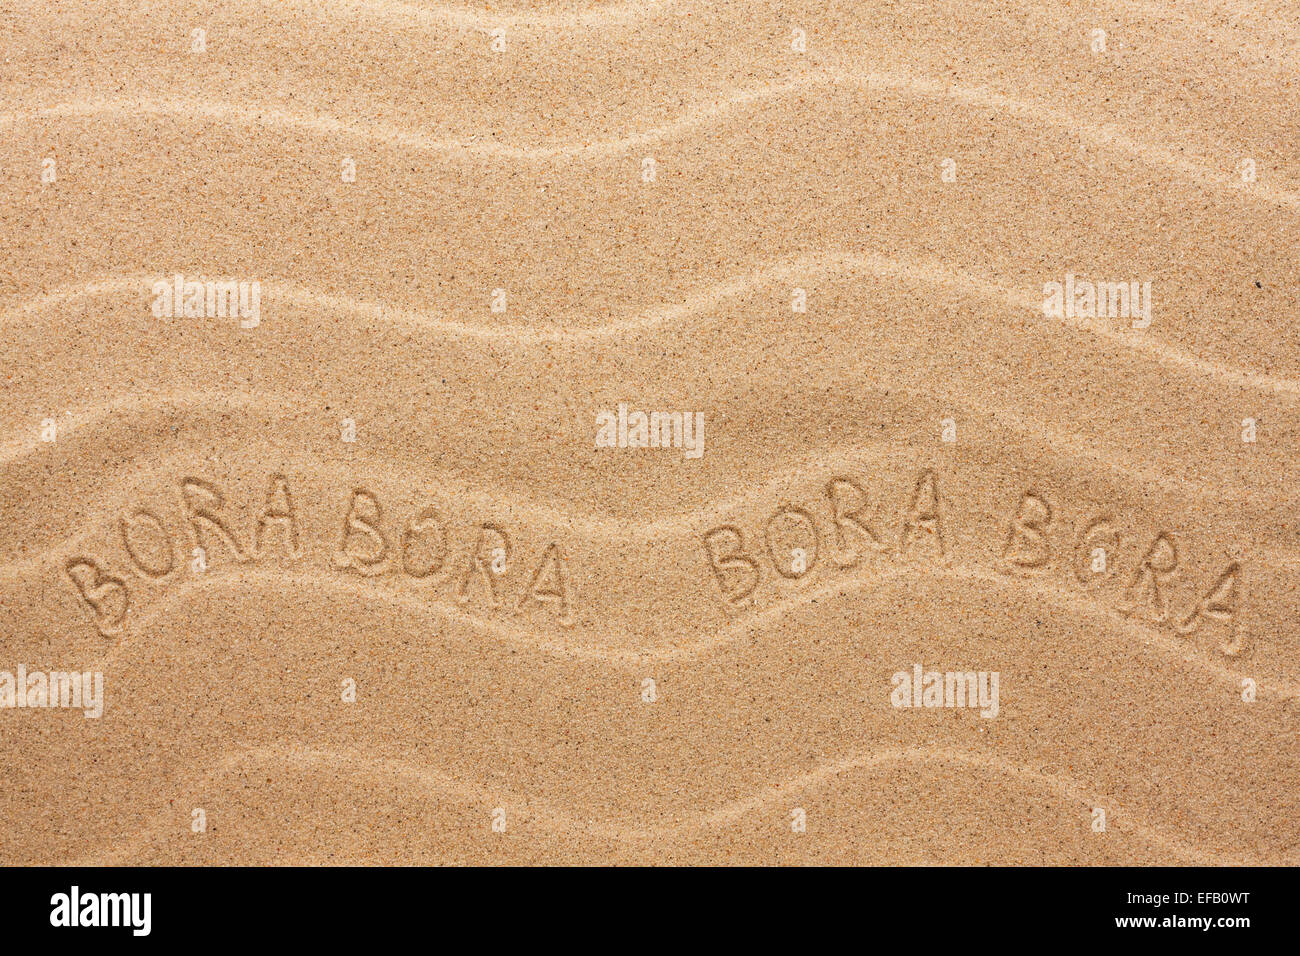 Bora Bora inscription on the wavy sand, as background Stock Photo